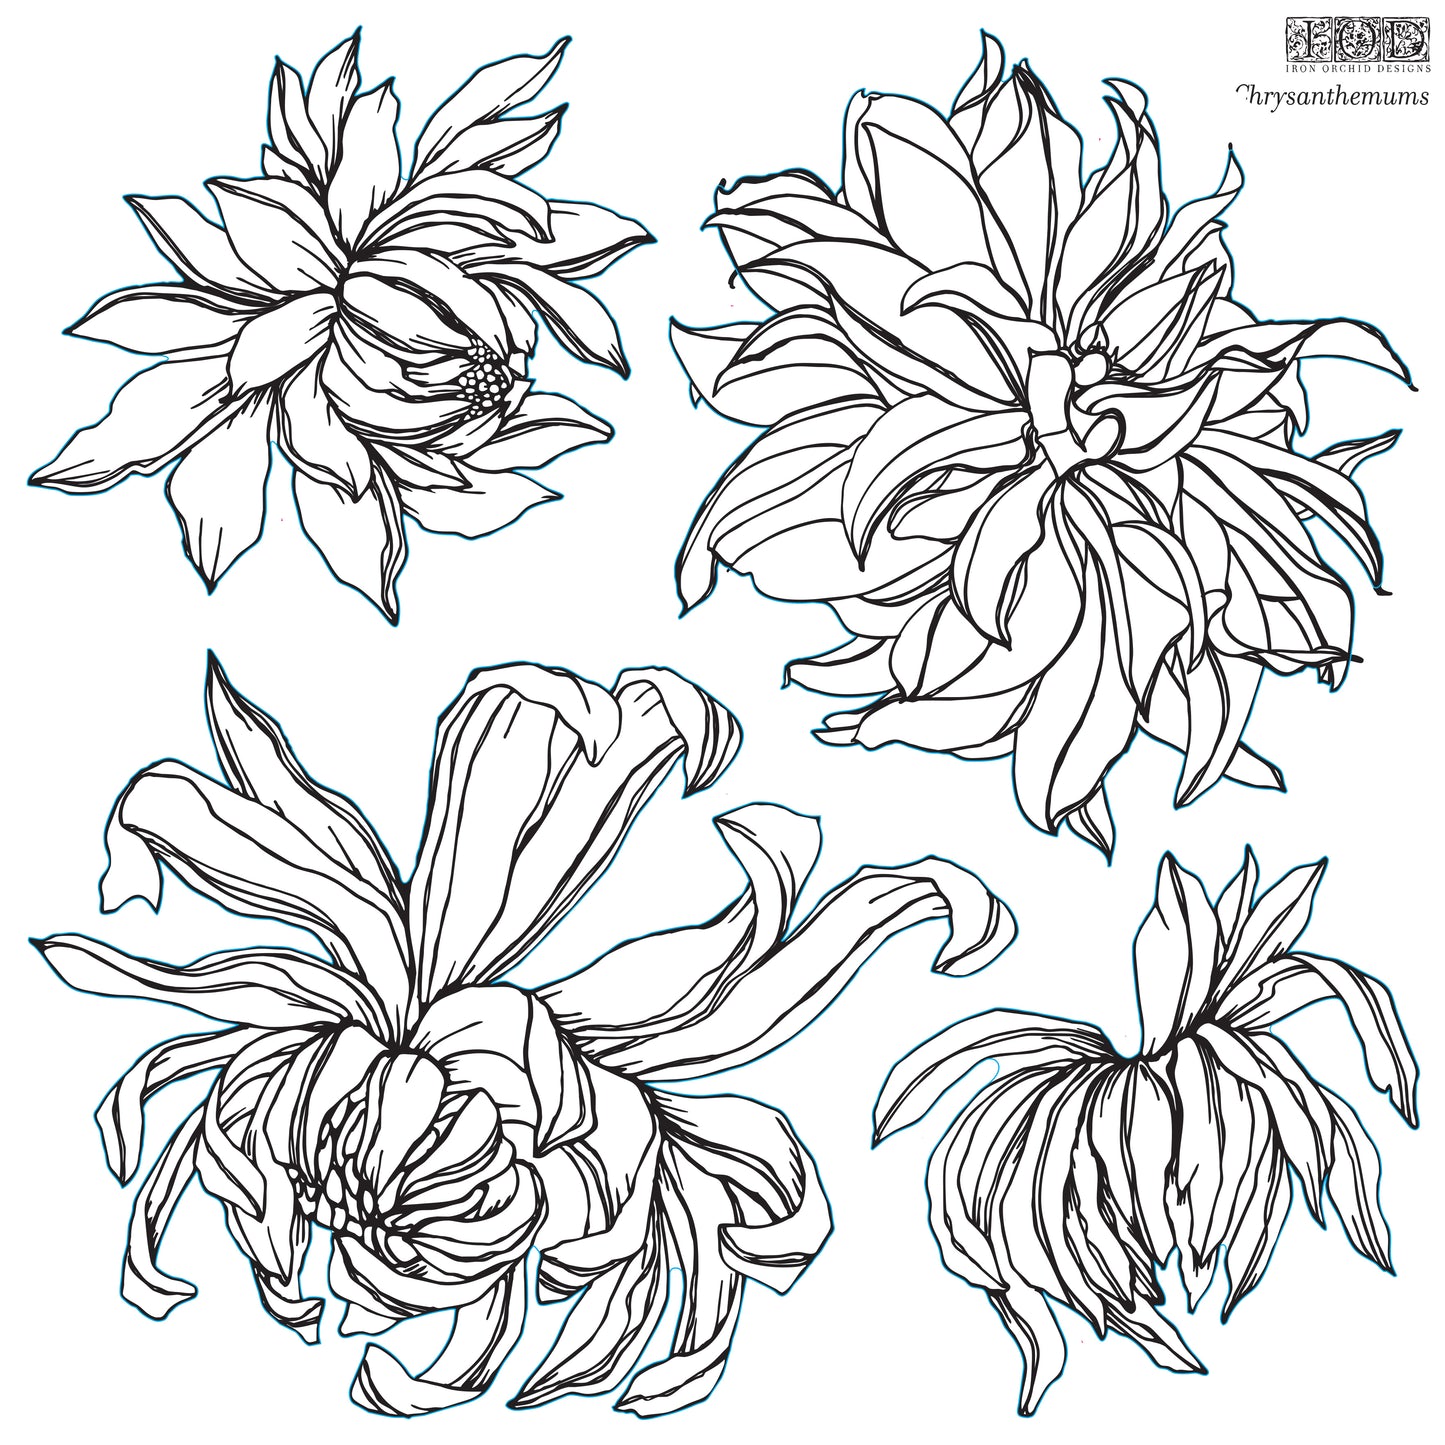 Chrysanthemum 12x12 Decor Stamp™